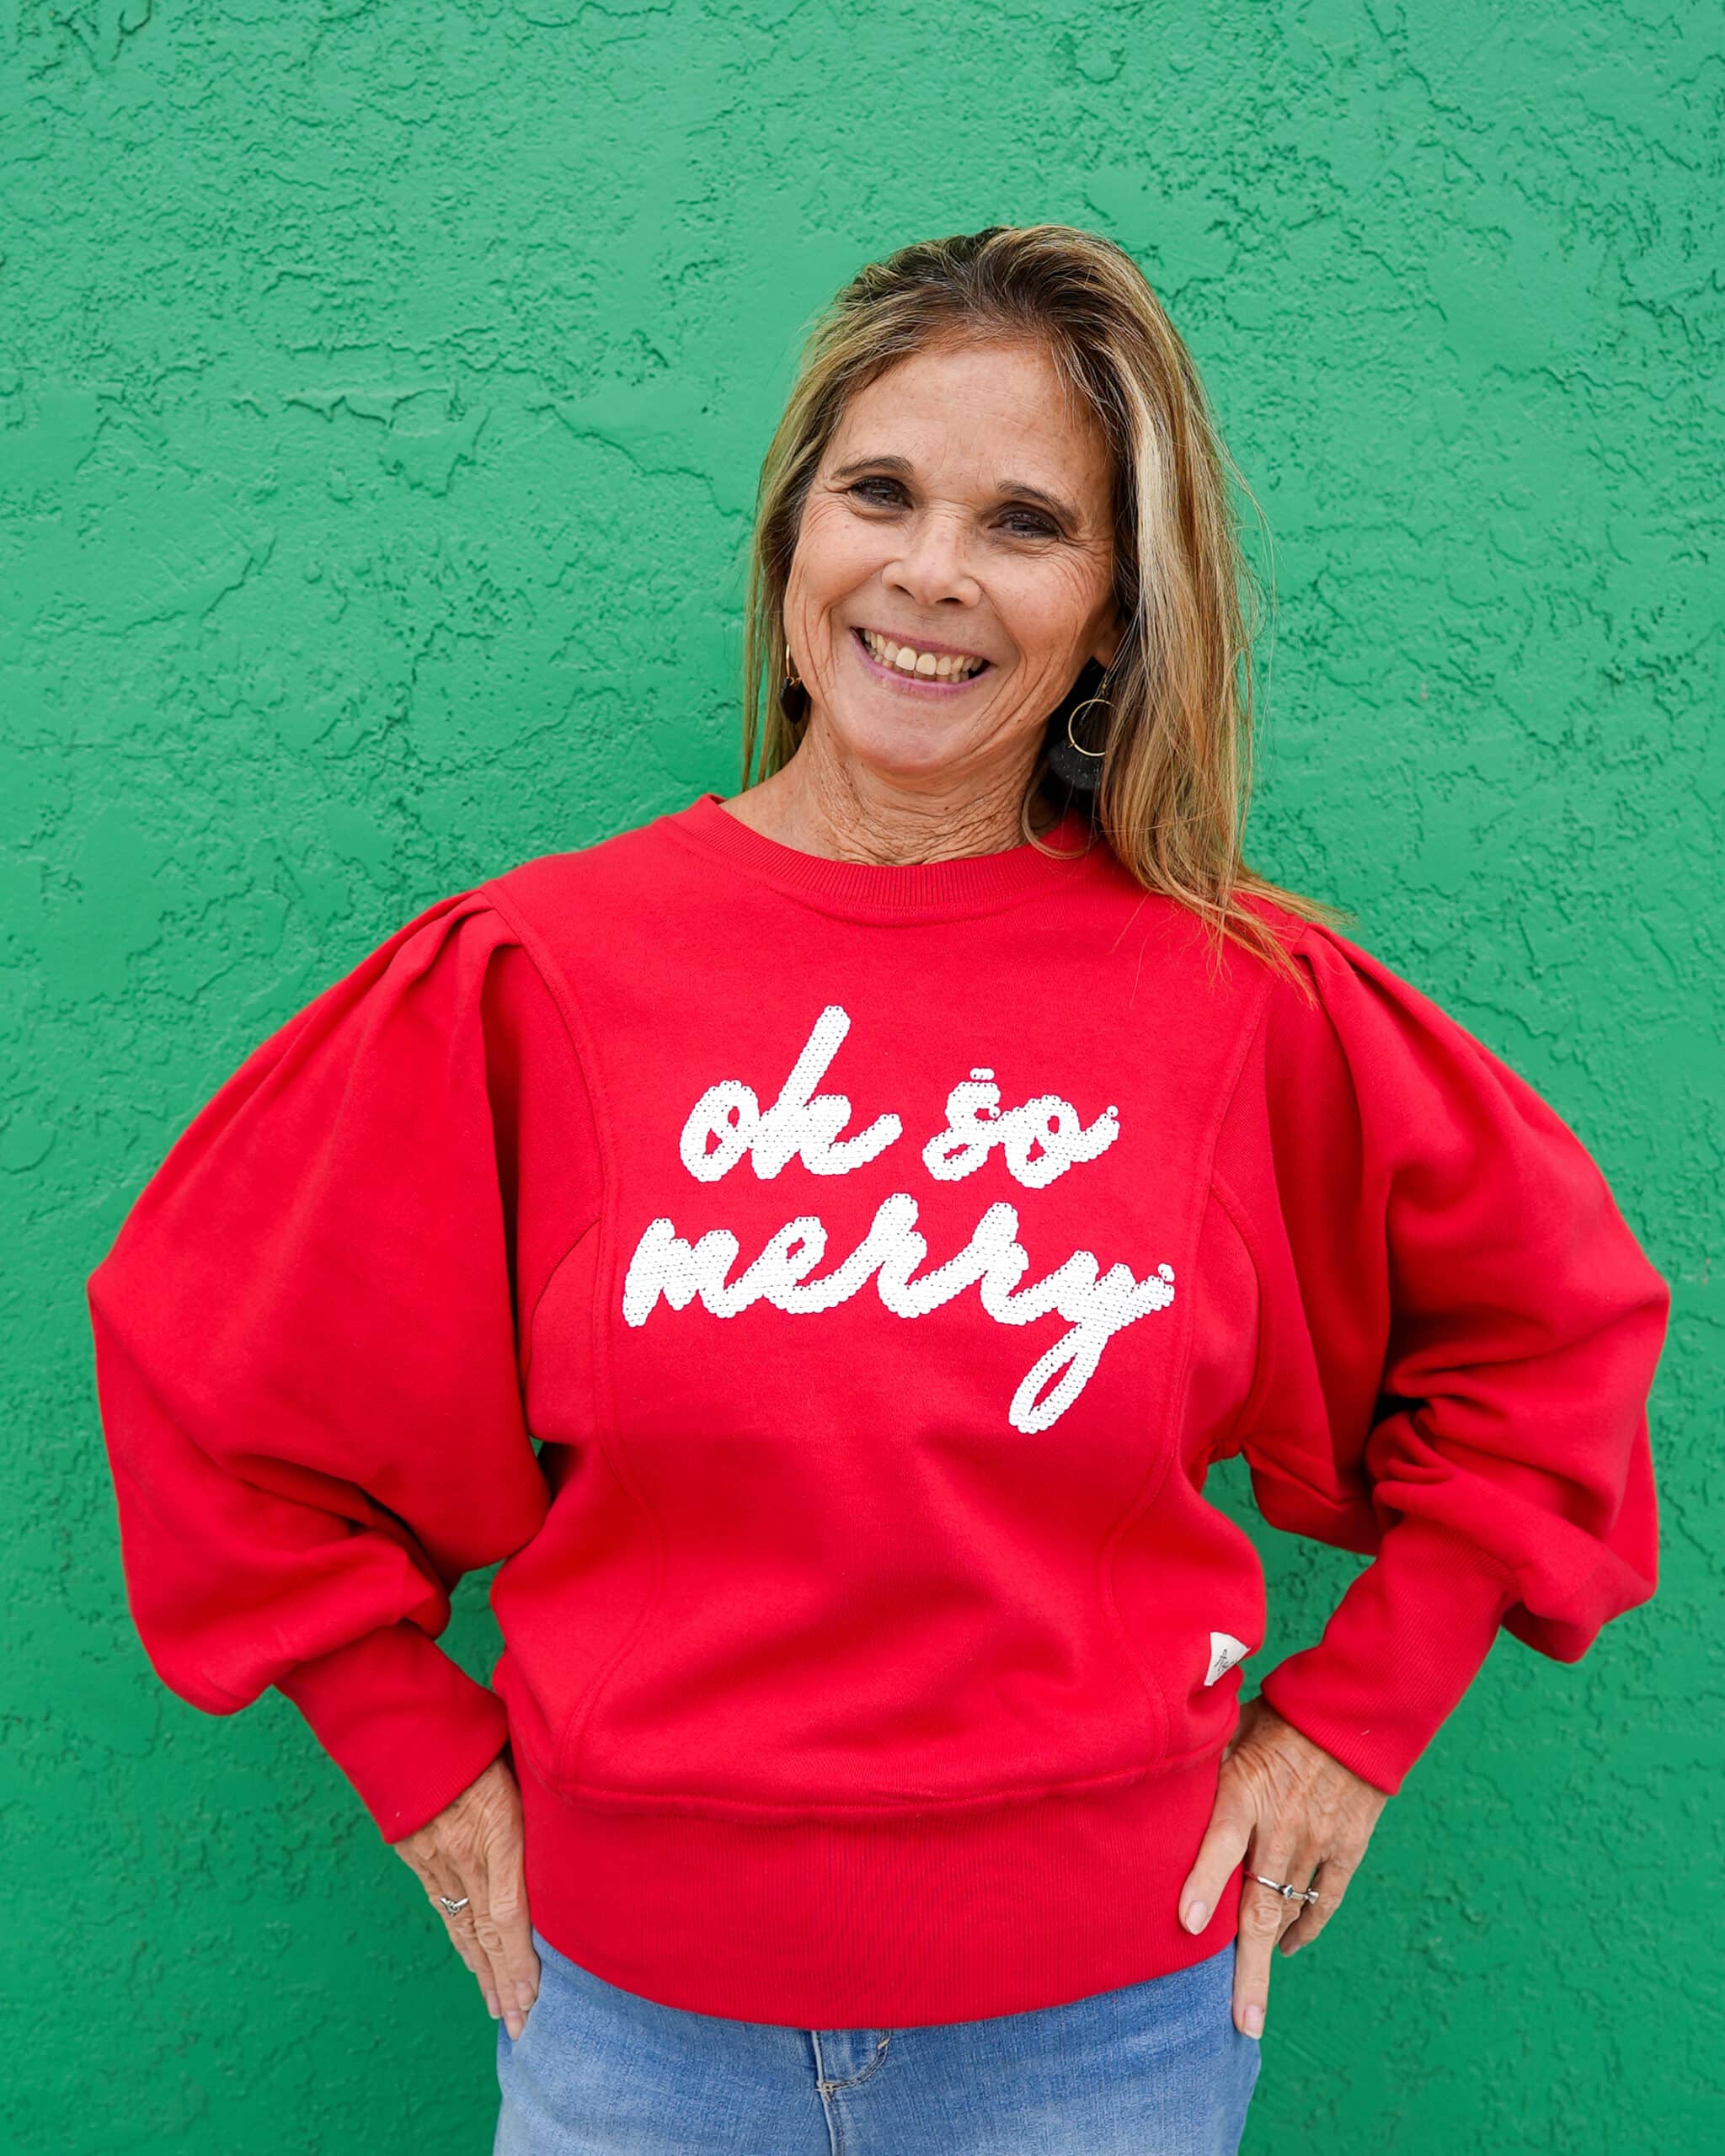 Sequin Red Sweatshirt “Oh So Merry” image